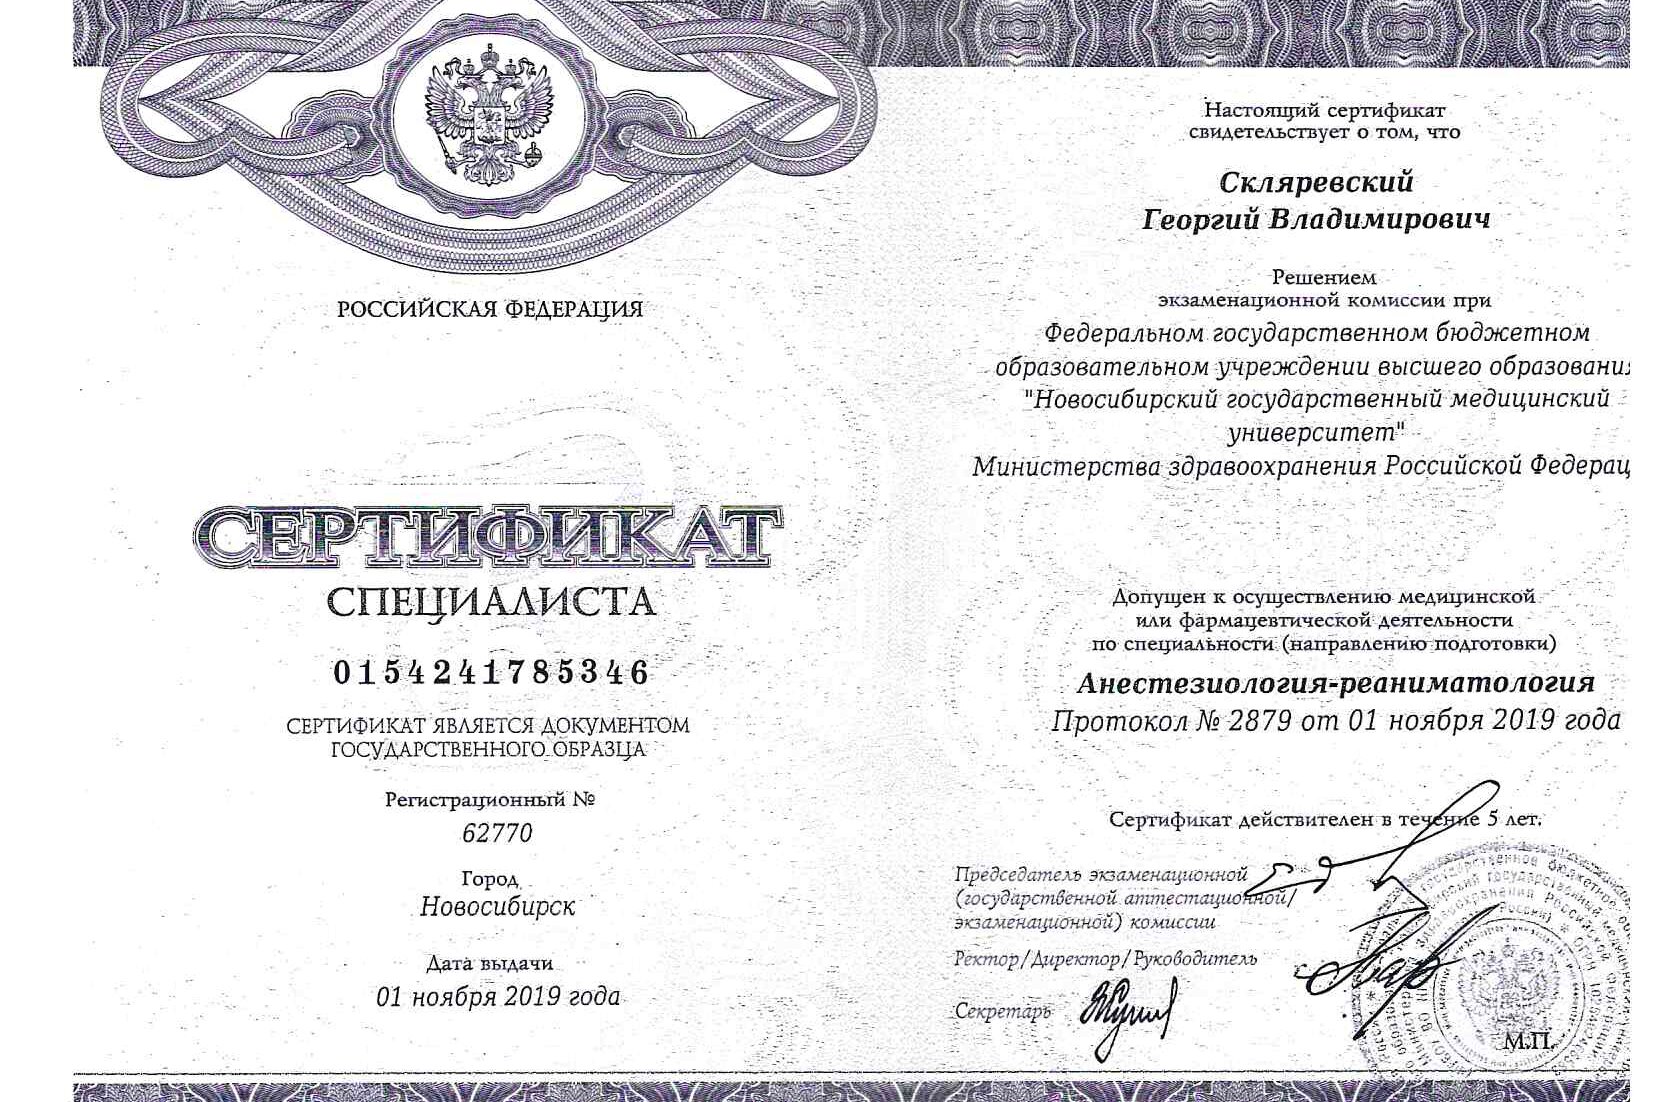 Сертификат специалиста анестезиология-реаниматология. 2019 г.